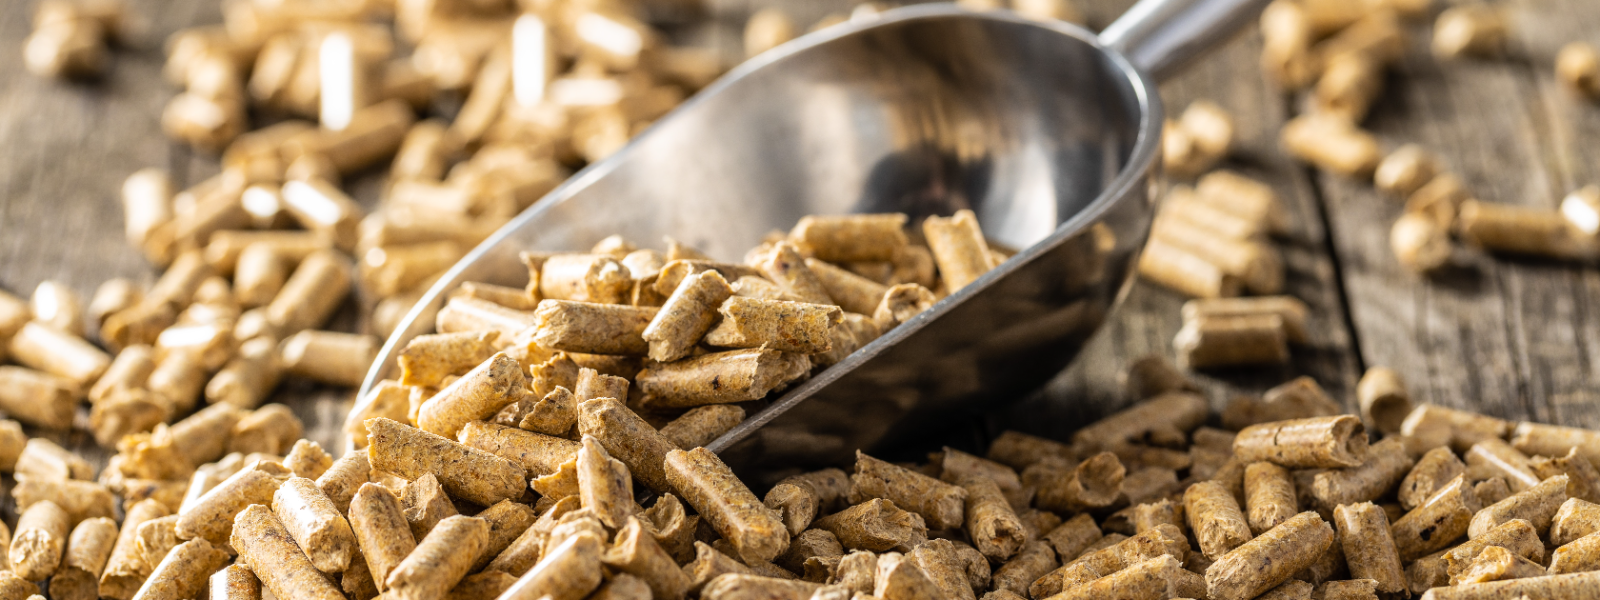 KÜTTEPARTNER OÜ - biobriquet, buckwheat husk pellets, oat pellets, buckwheat husk briquettes, biopellets, Wood pellets a...